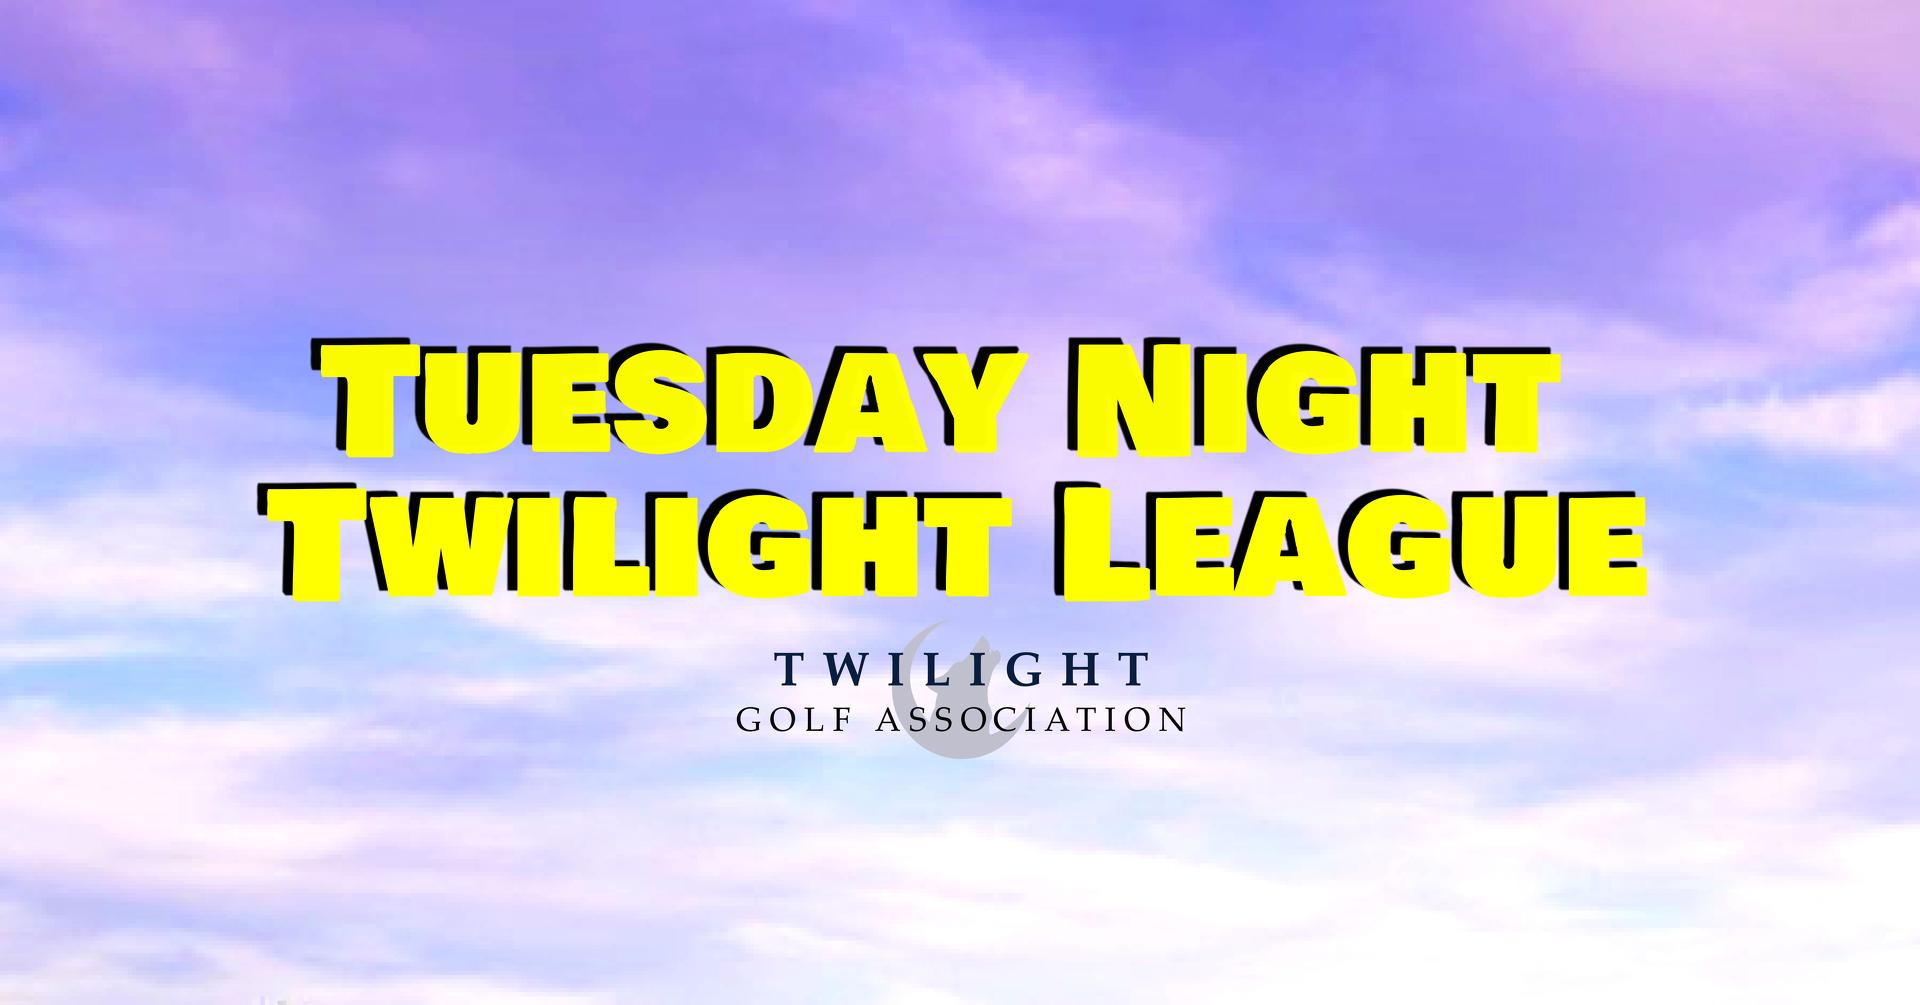 Tuesday Night Twilight League at GCU Golf Course